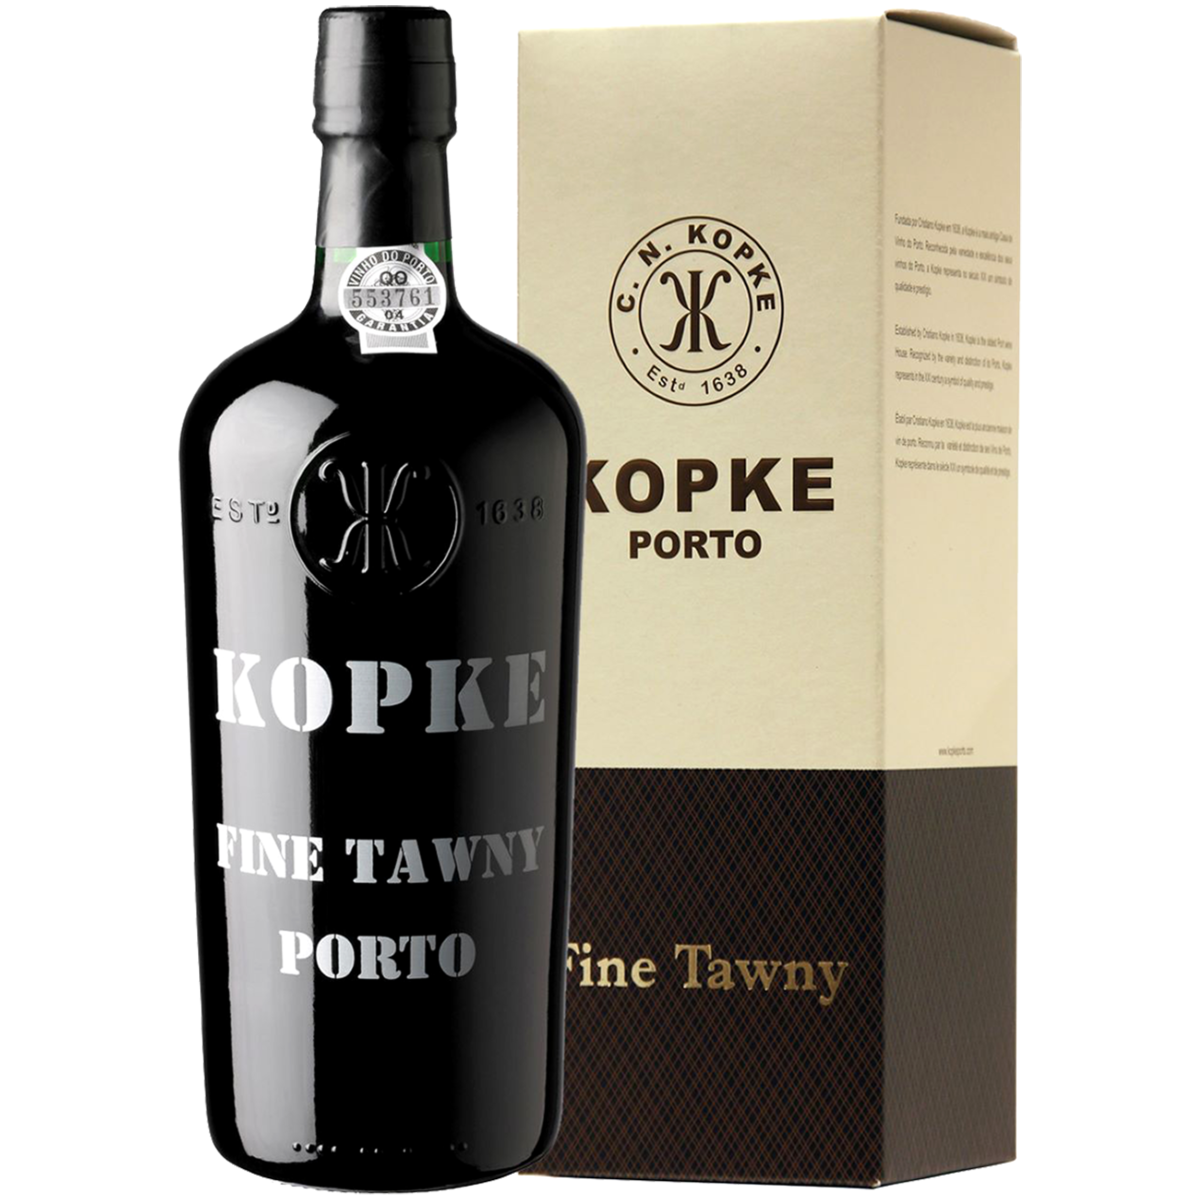 Porto tawny. Kopke Fine Tawny Porto. Вино копке Файн Тони Порто. Портвейн Kopke Porto. Kopke Ruby портвейн.